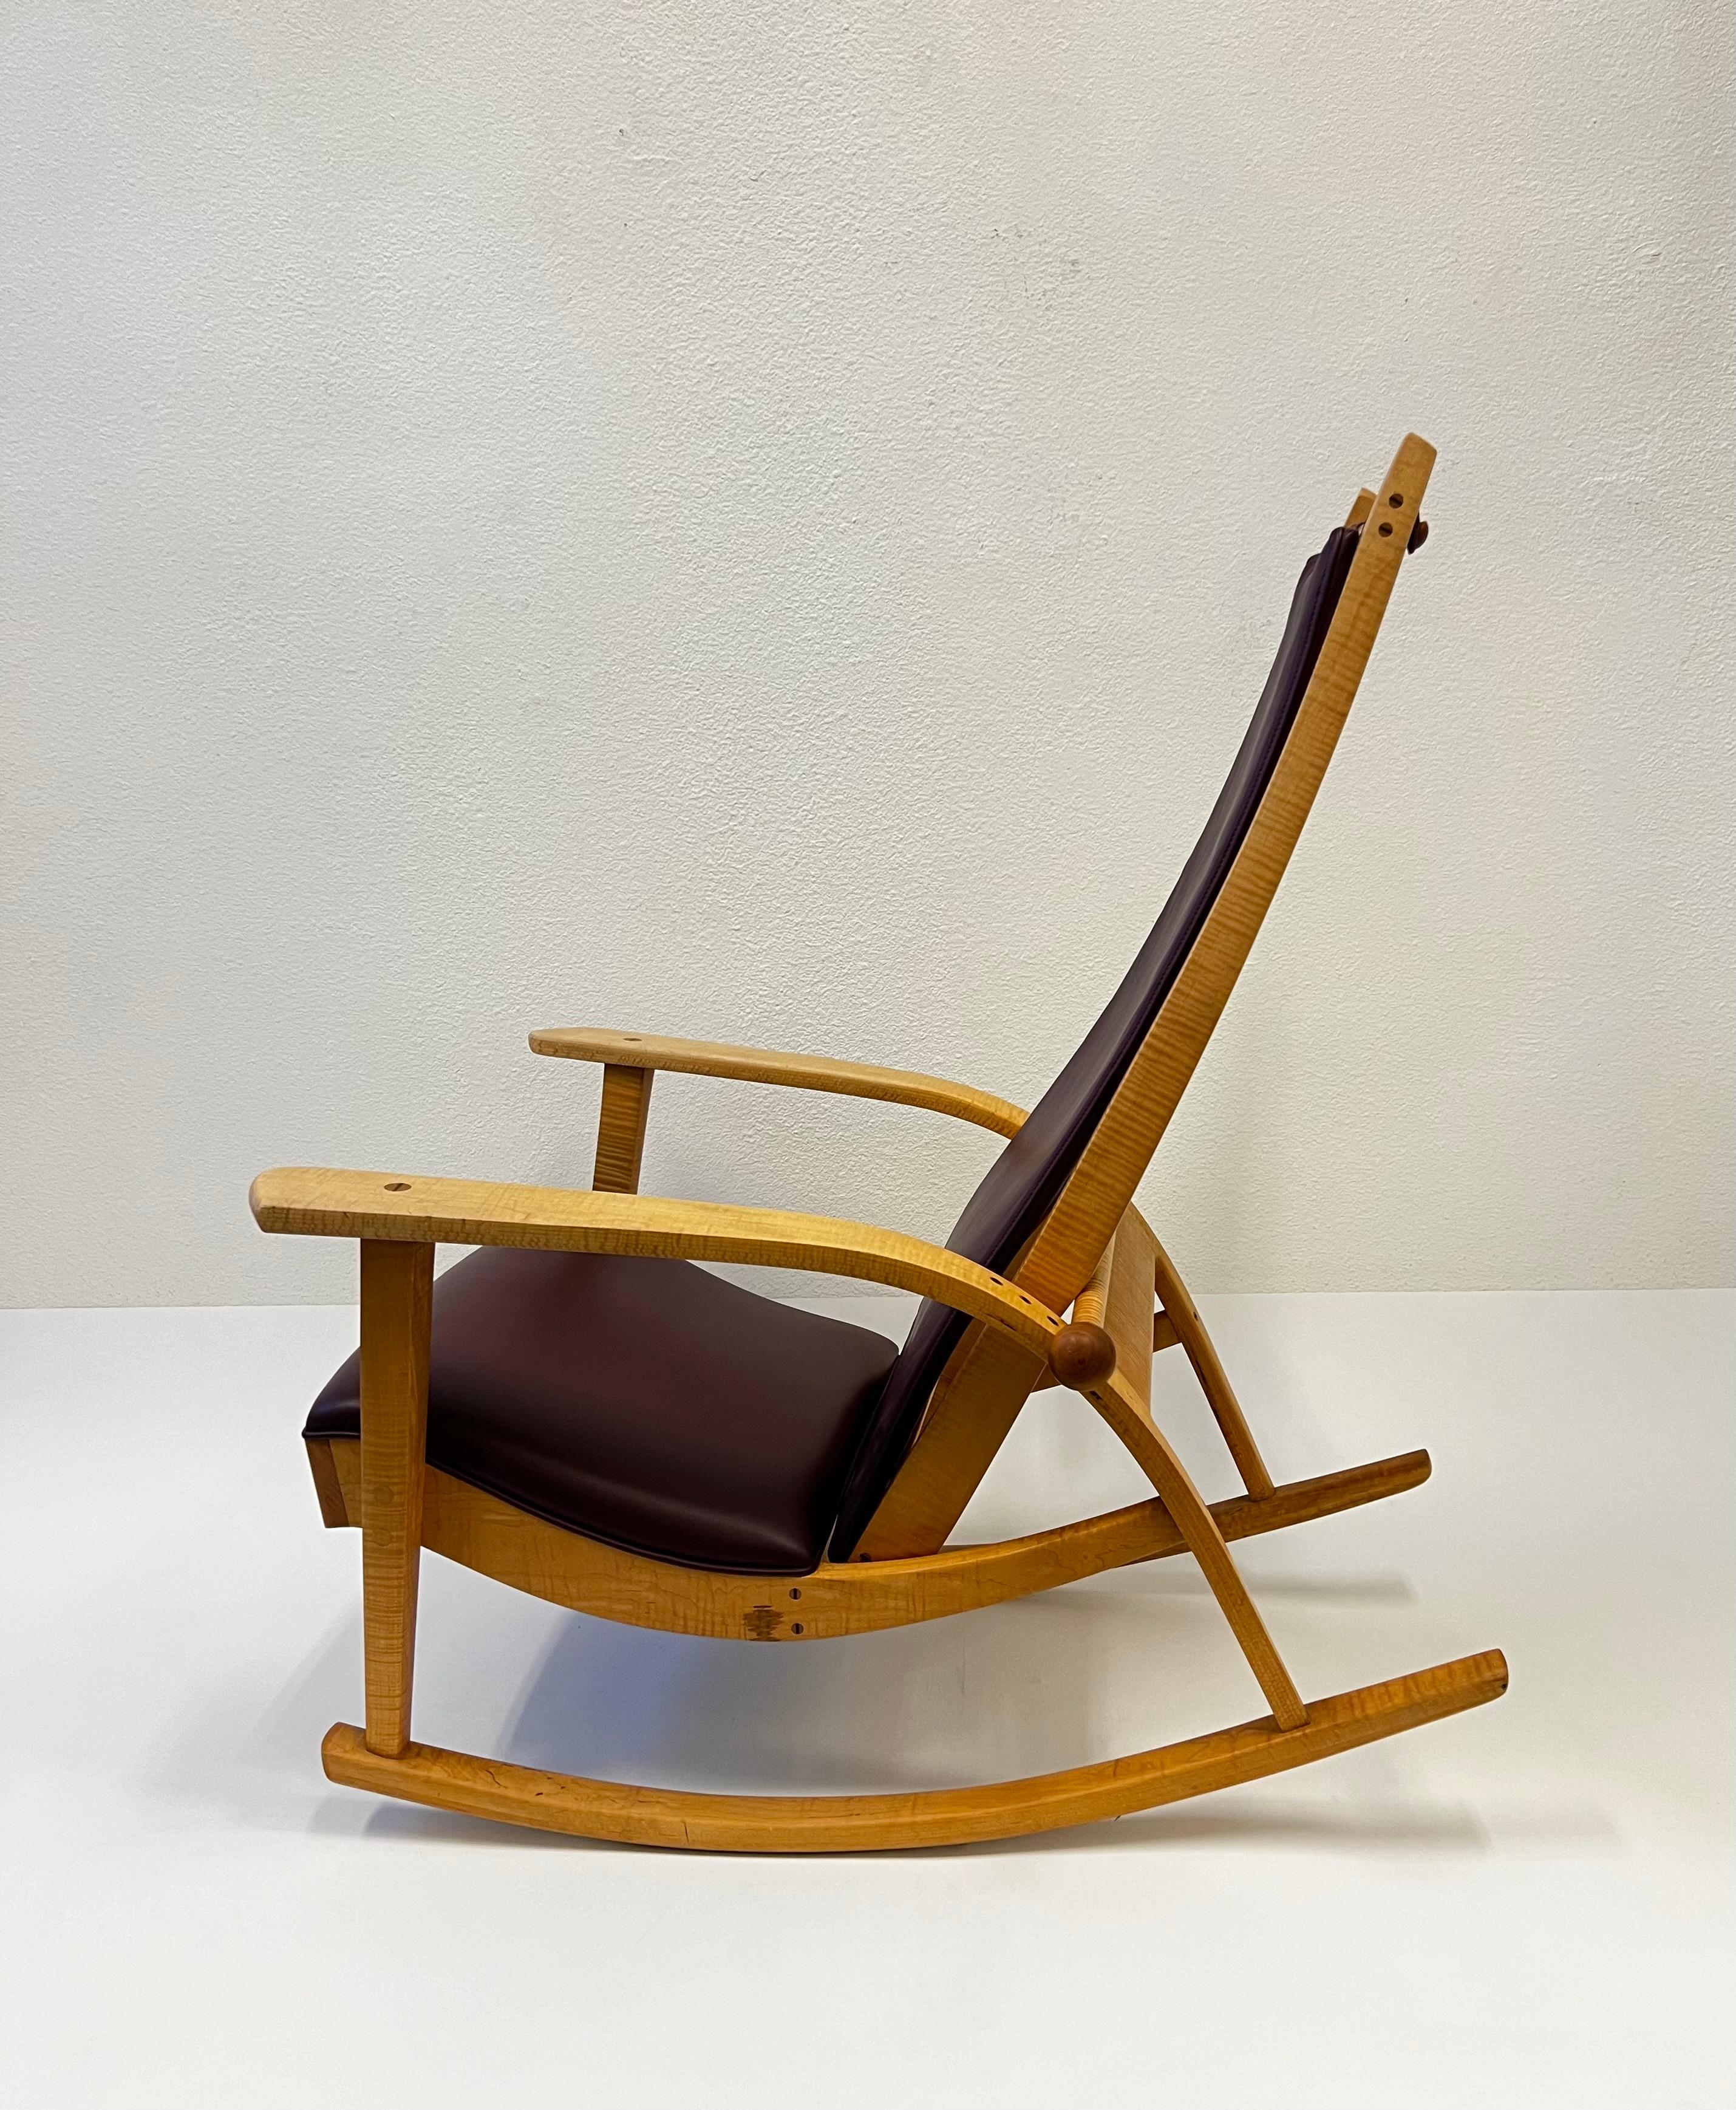 Studio Hand Crafted Rocking Chair by Robert Erickson  1